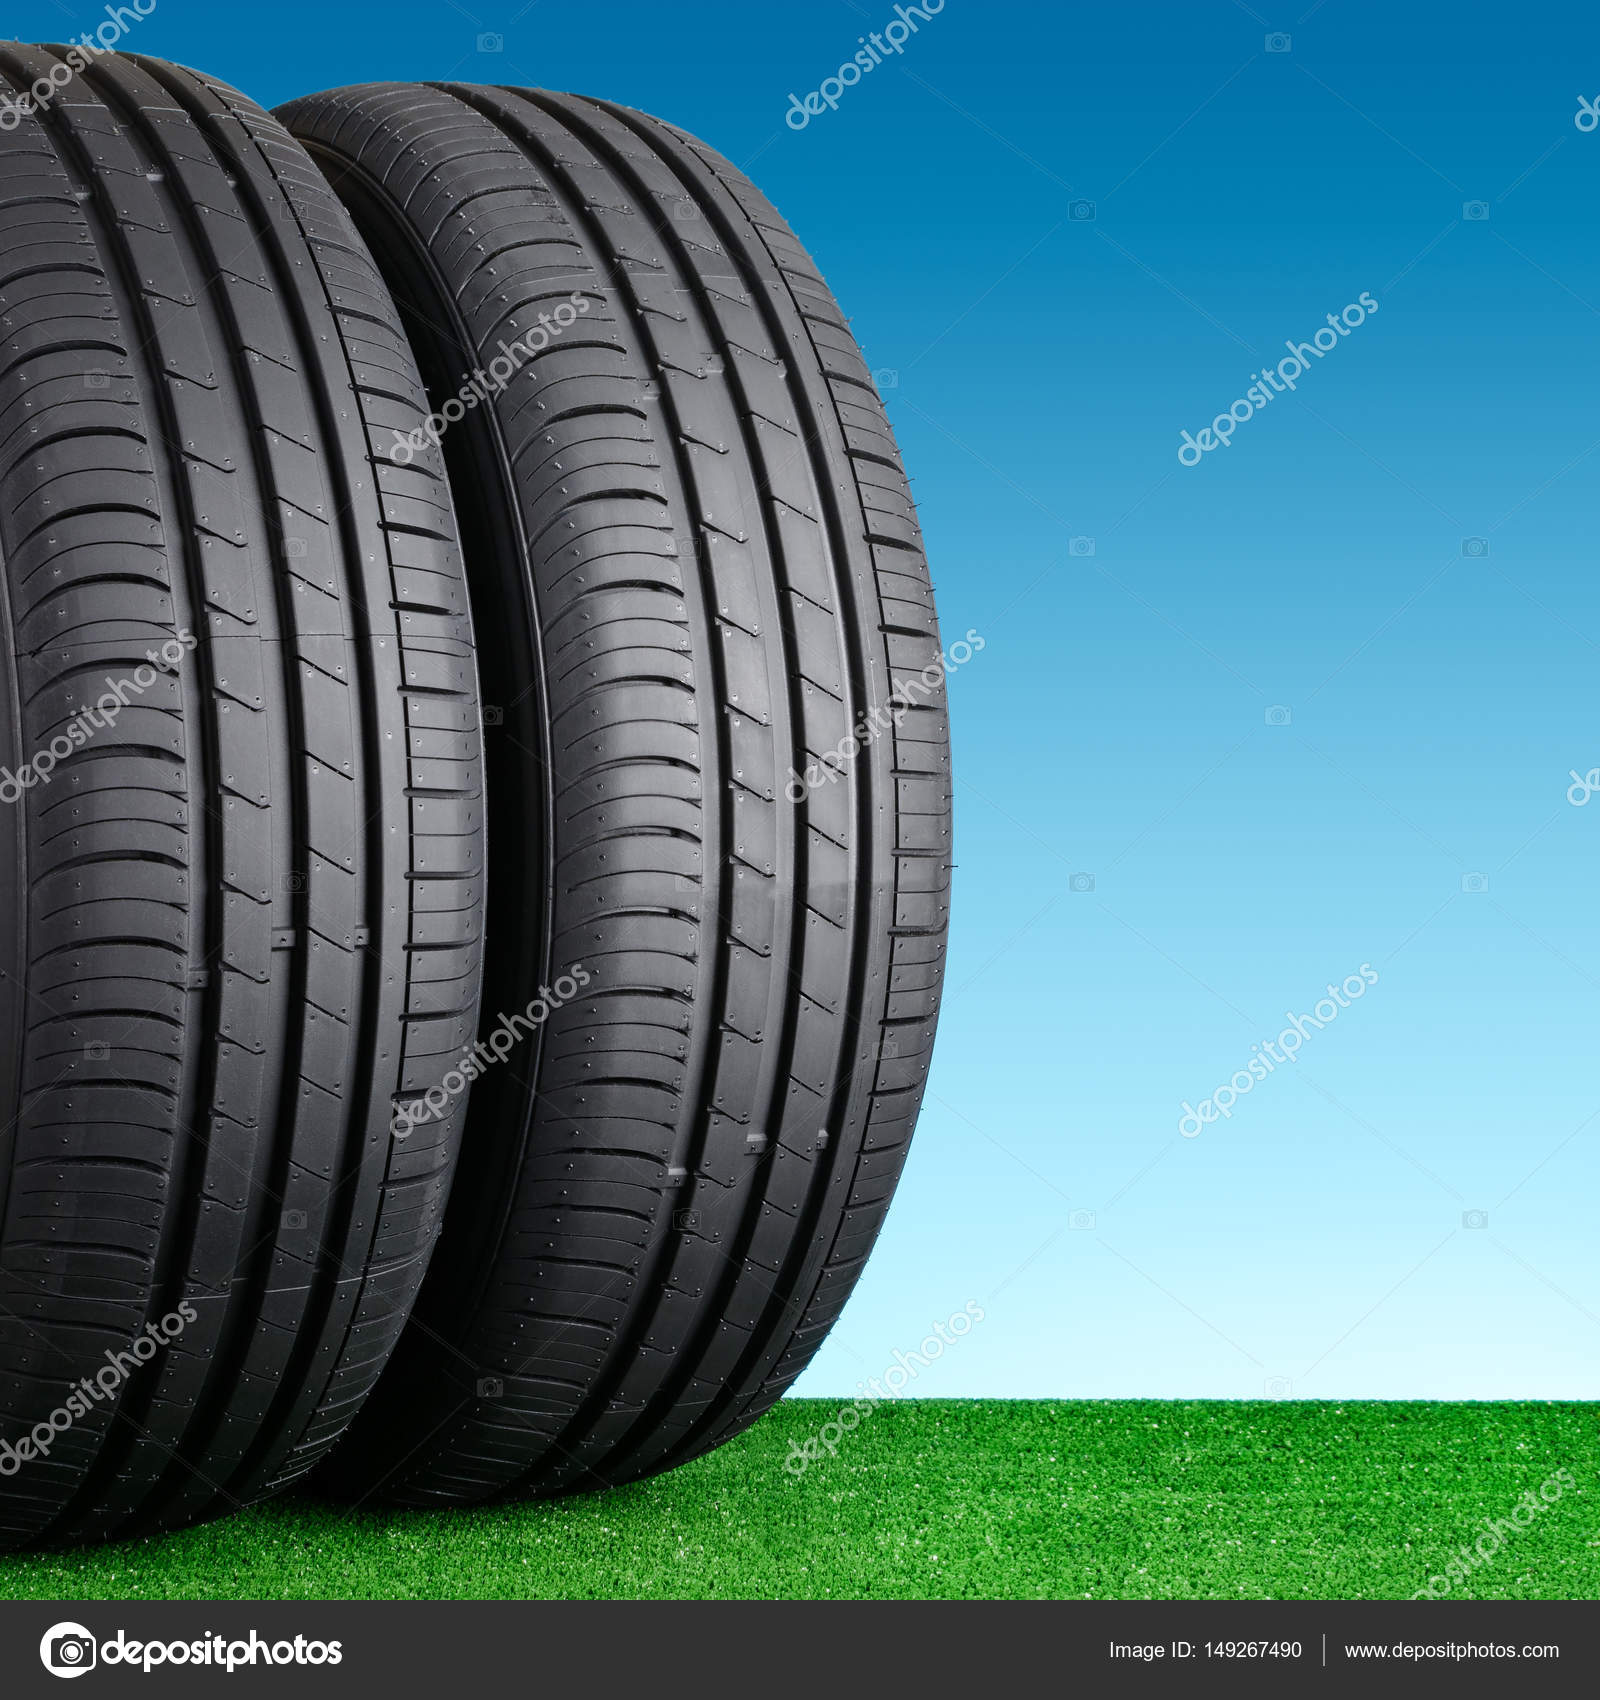 Summer car tires on grass — Stock Photo © RamiF #149267490